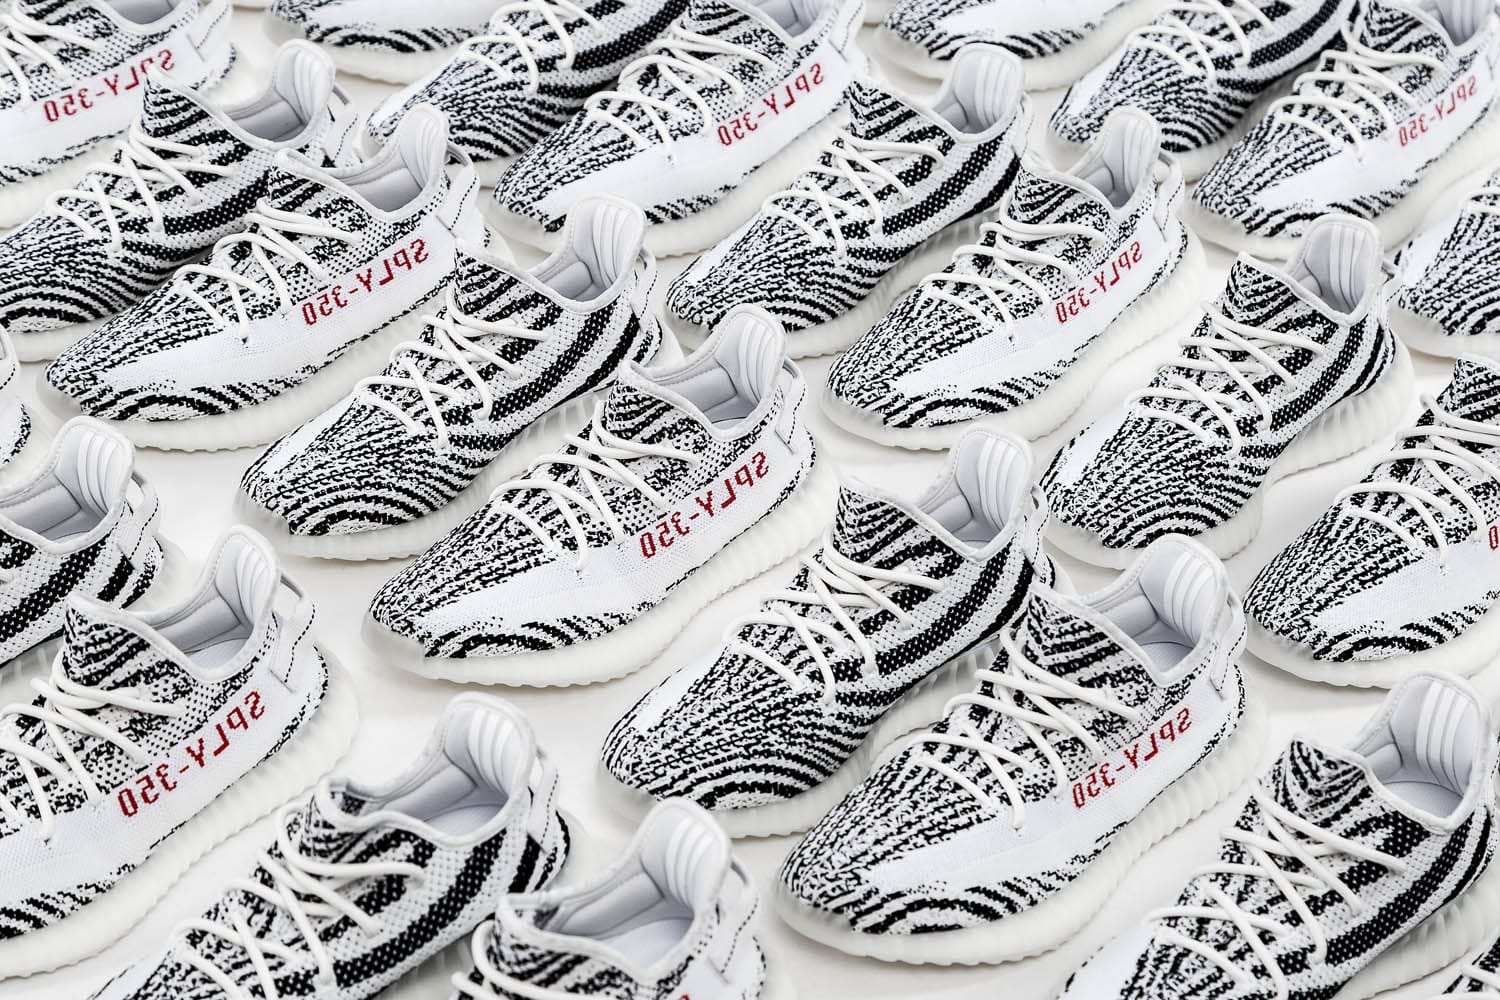 adidas yeezy boost 350 v2 zebra release date